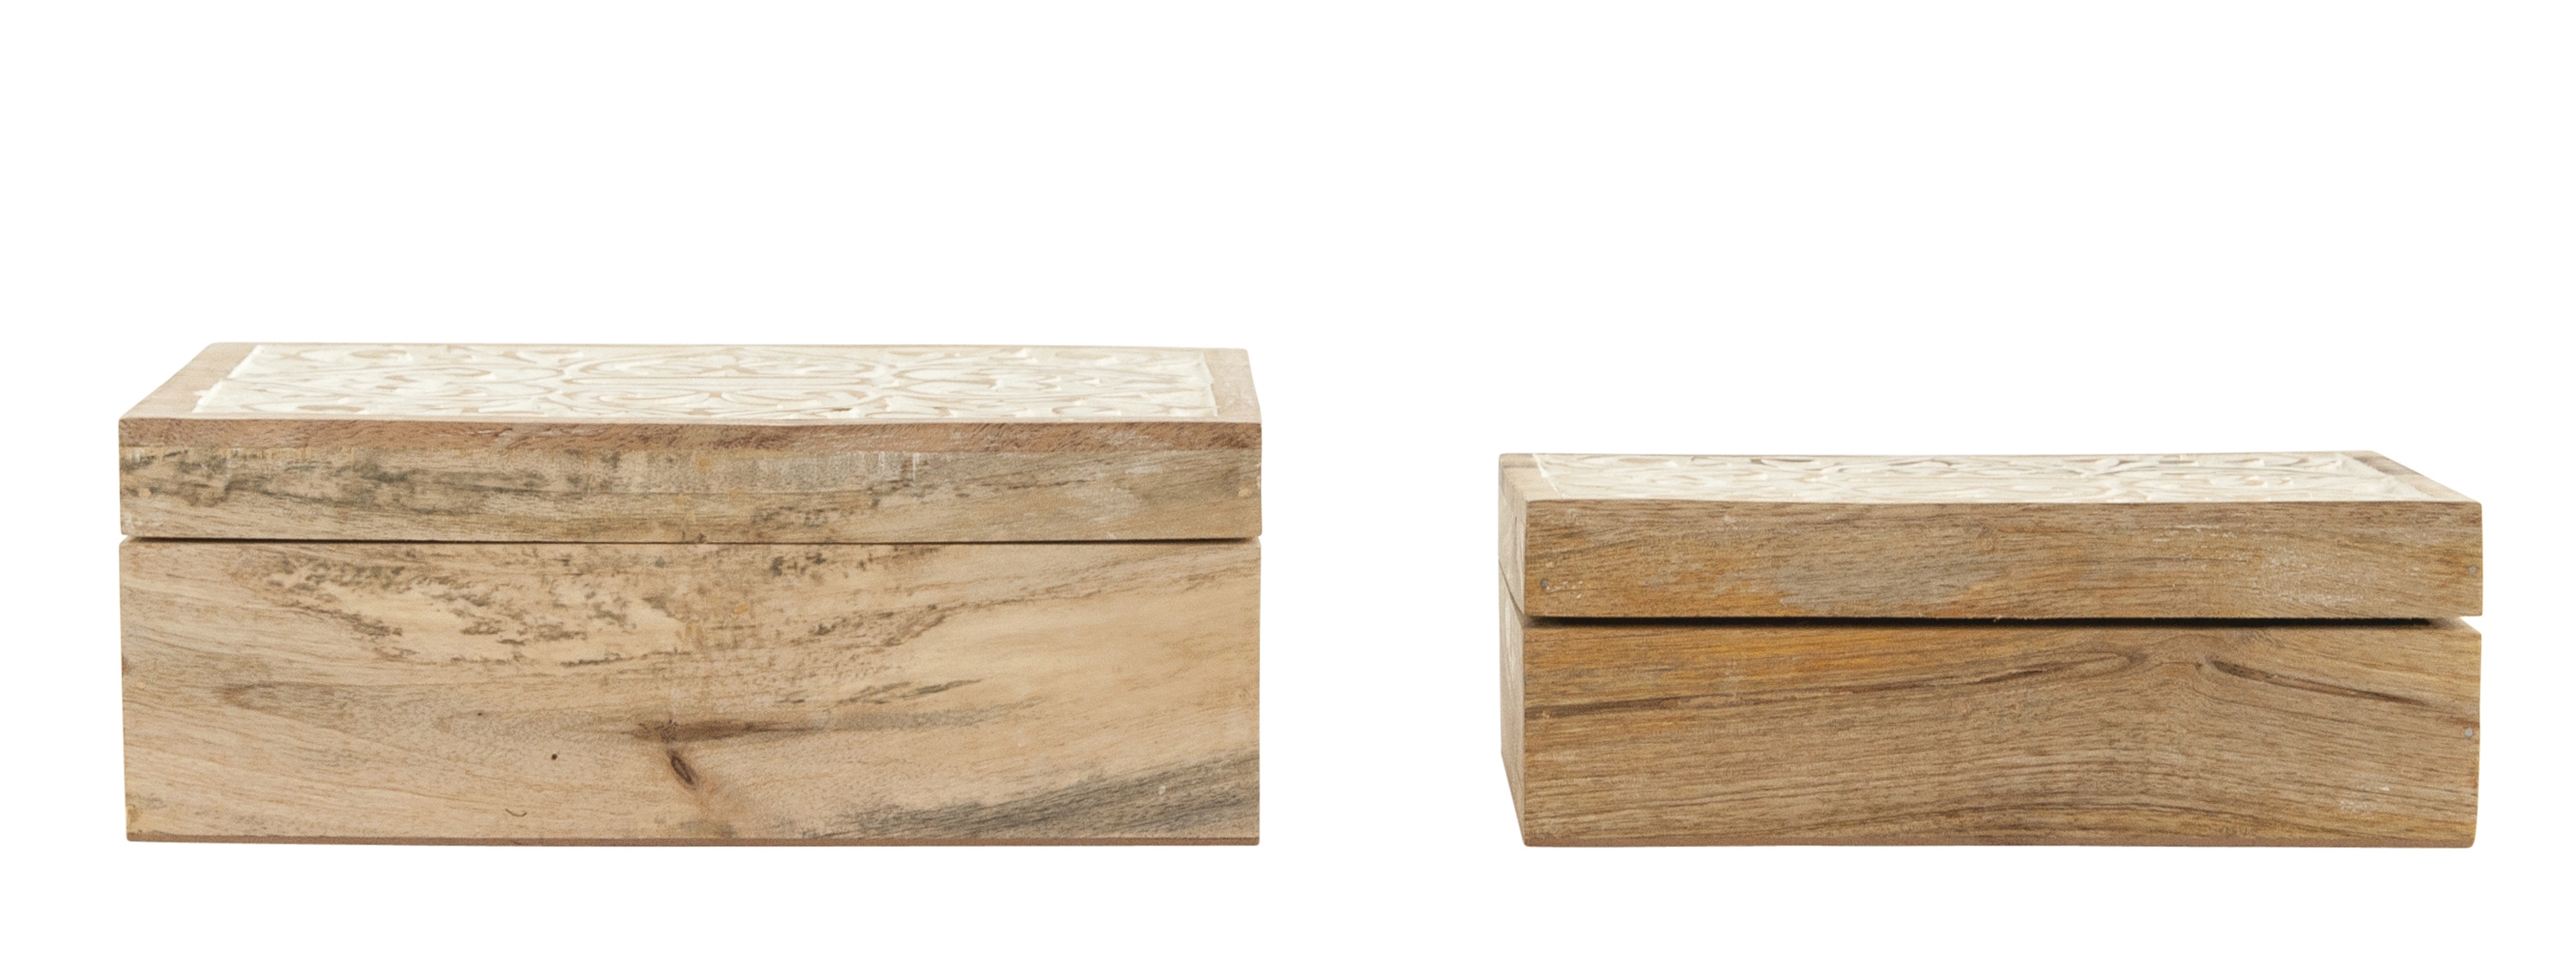 Zev Decorative Boxes, Set of 2 - Image 1